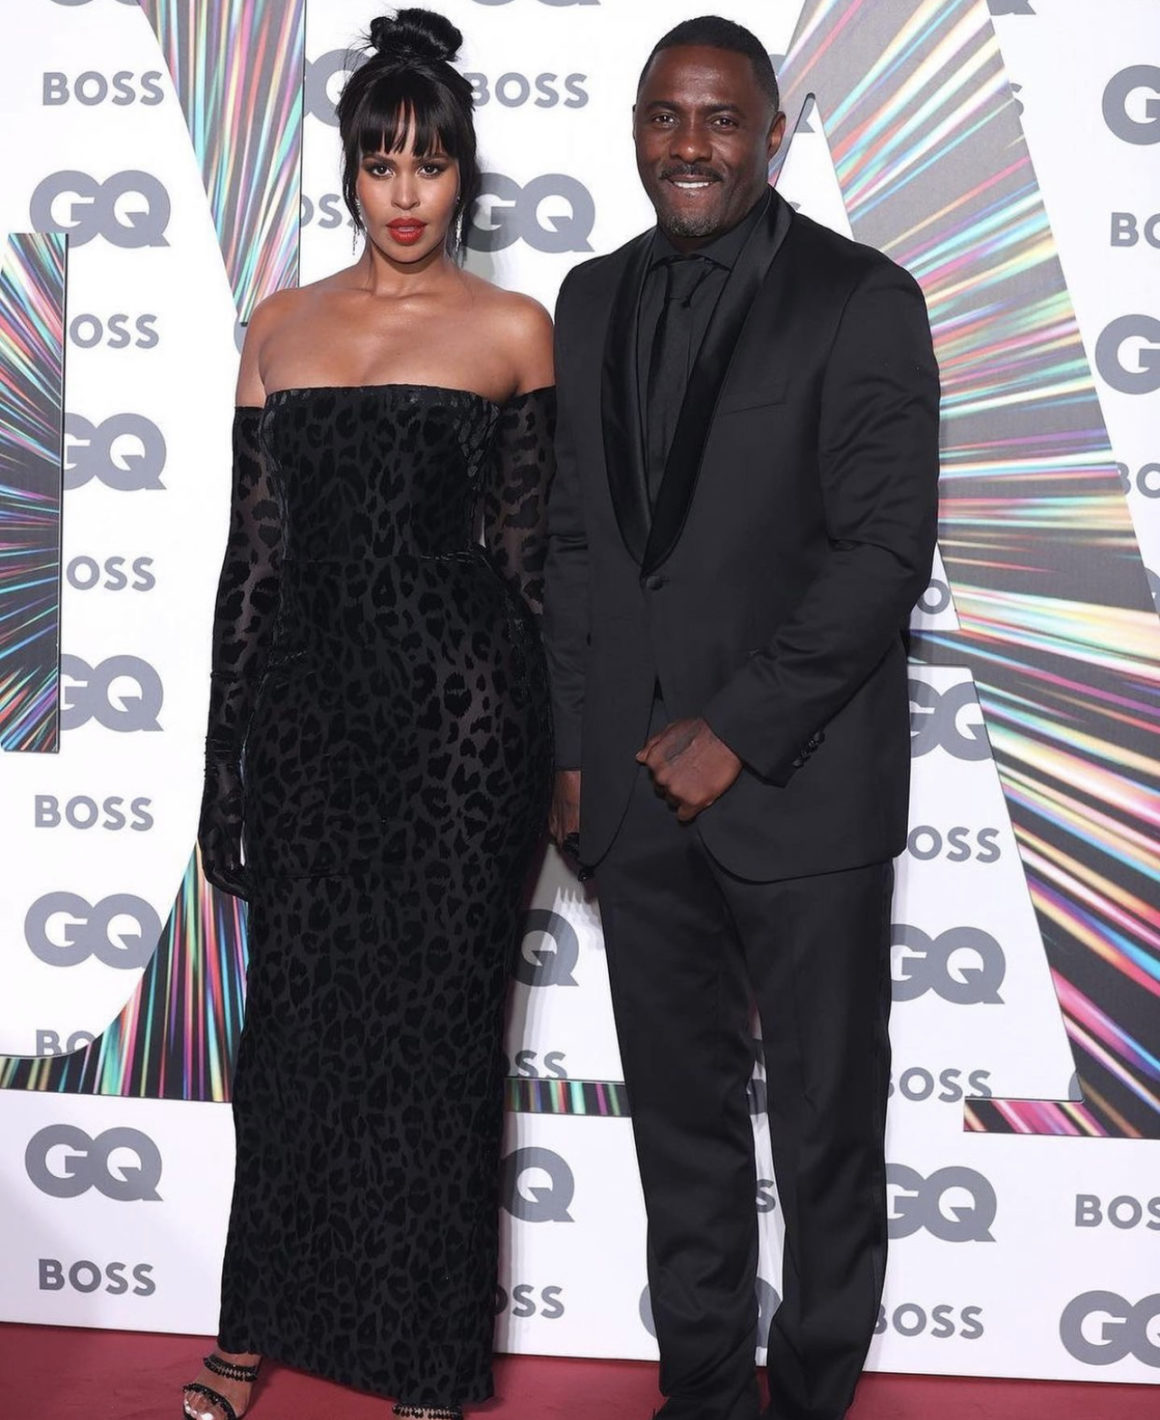 Sabrina Elba Stuns in Alex Perry Black Velvet Off Shoulder Leopard Print Dres at GQ Awards 2021 With Idris Elba